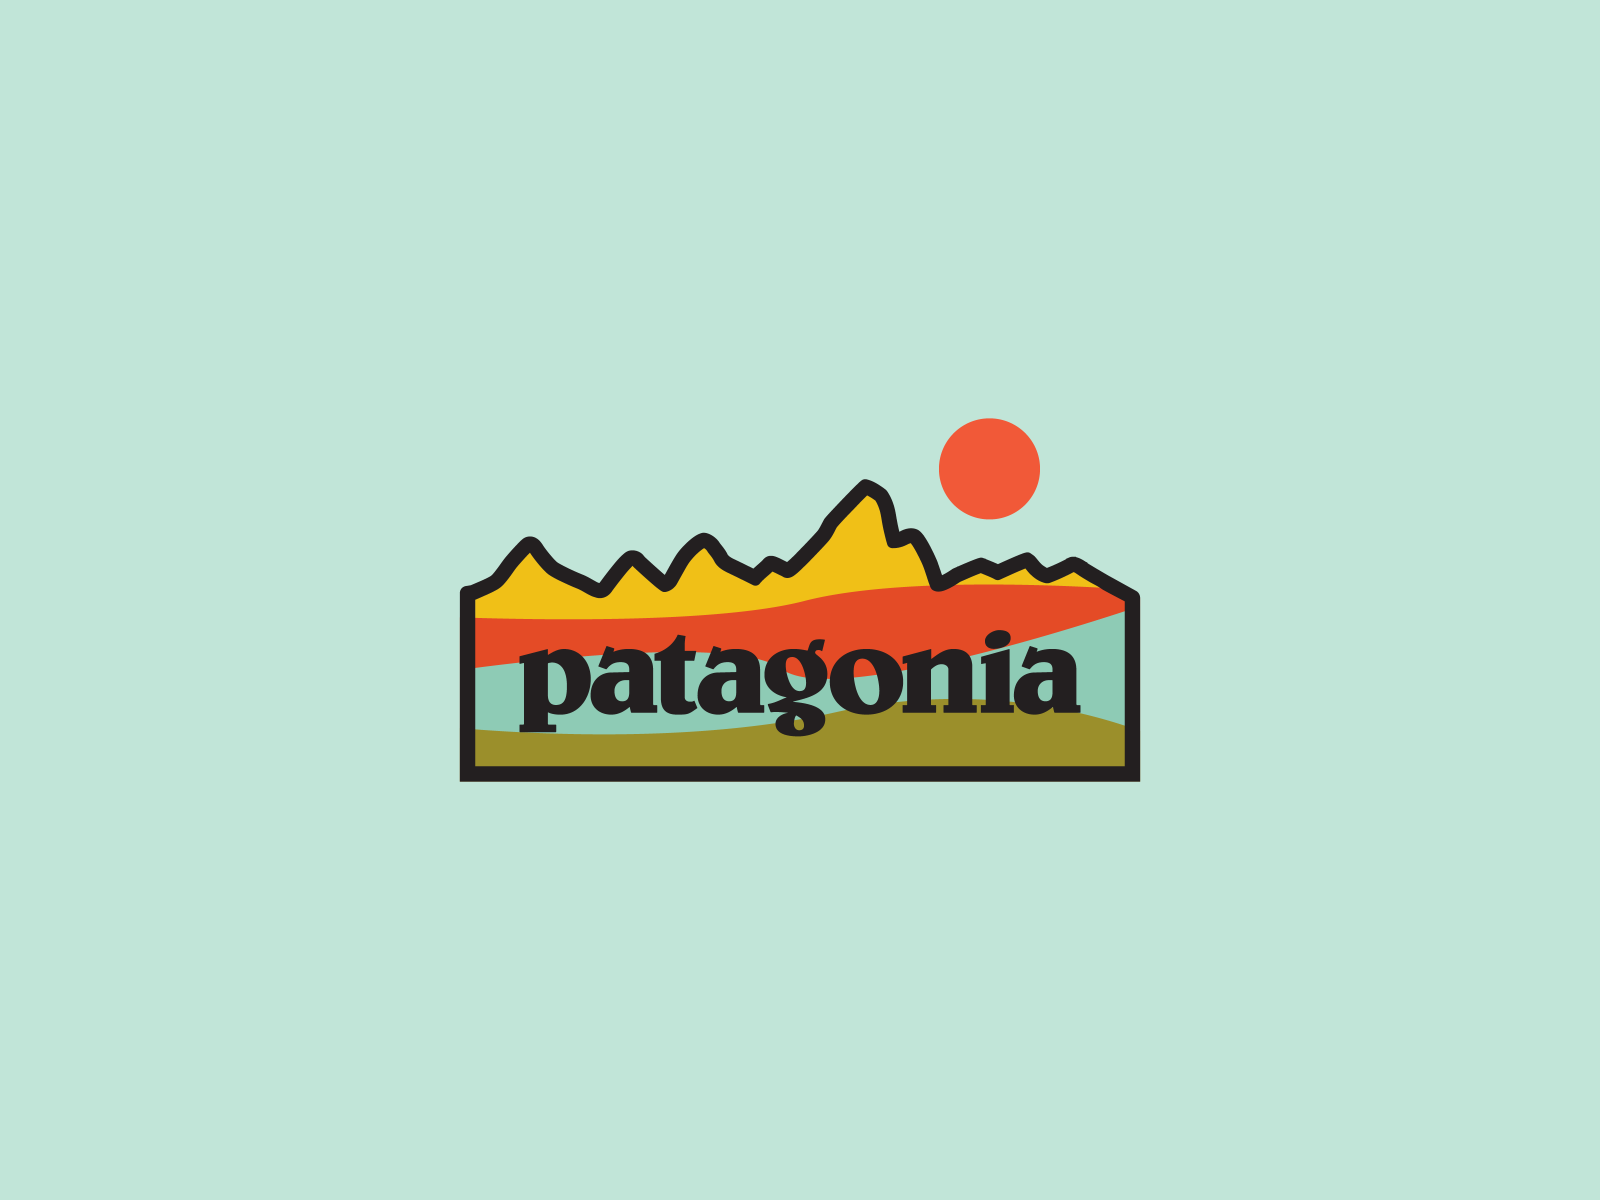 Patagonia Waves by Josh Warren on Dribbble